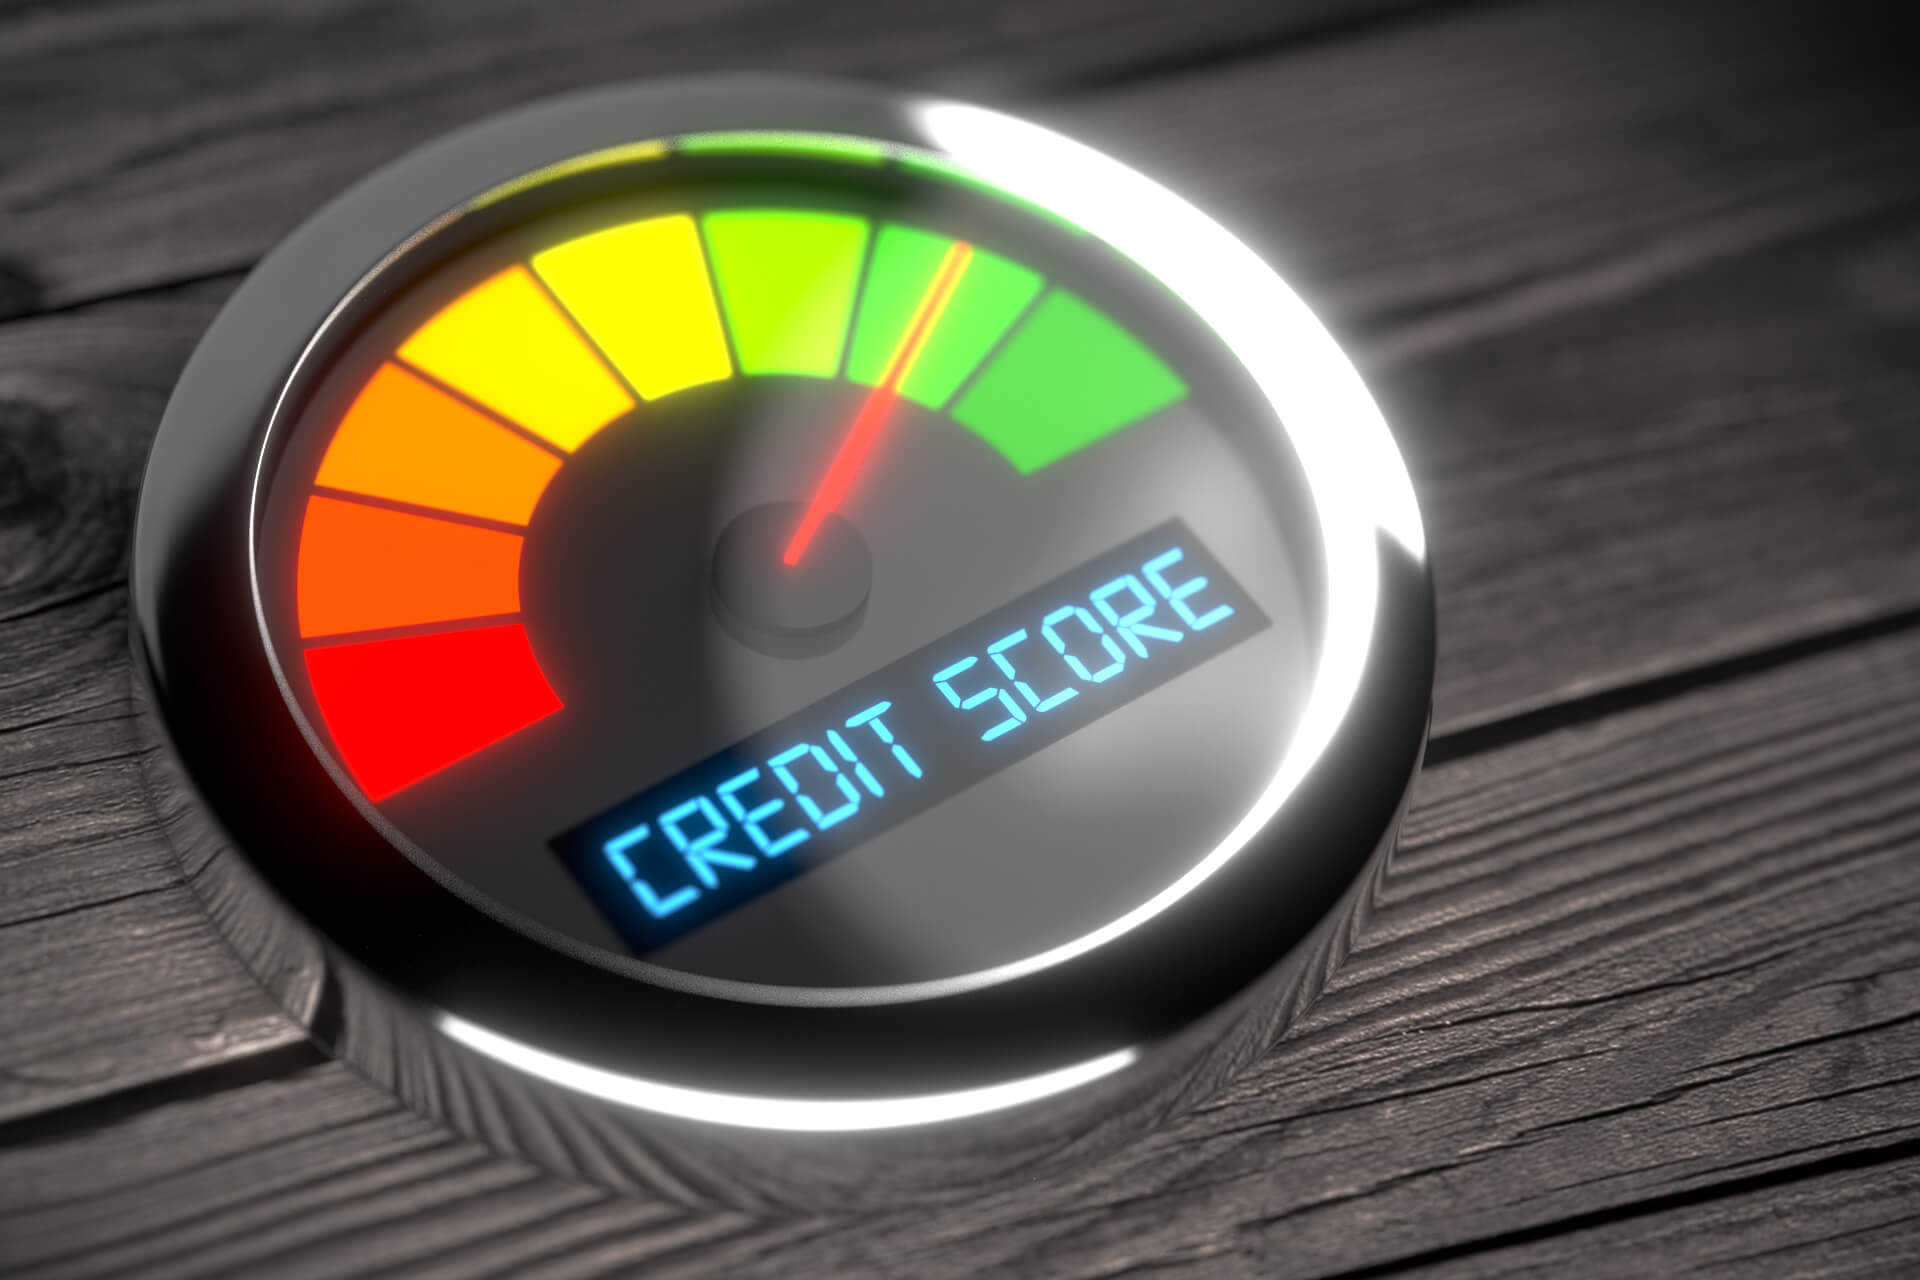 Chrome credit score meter free image download